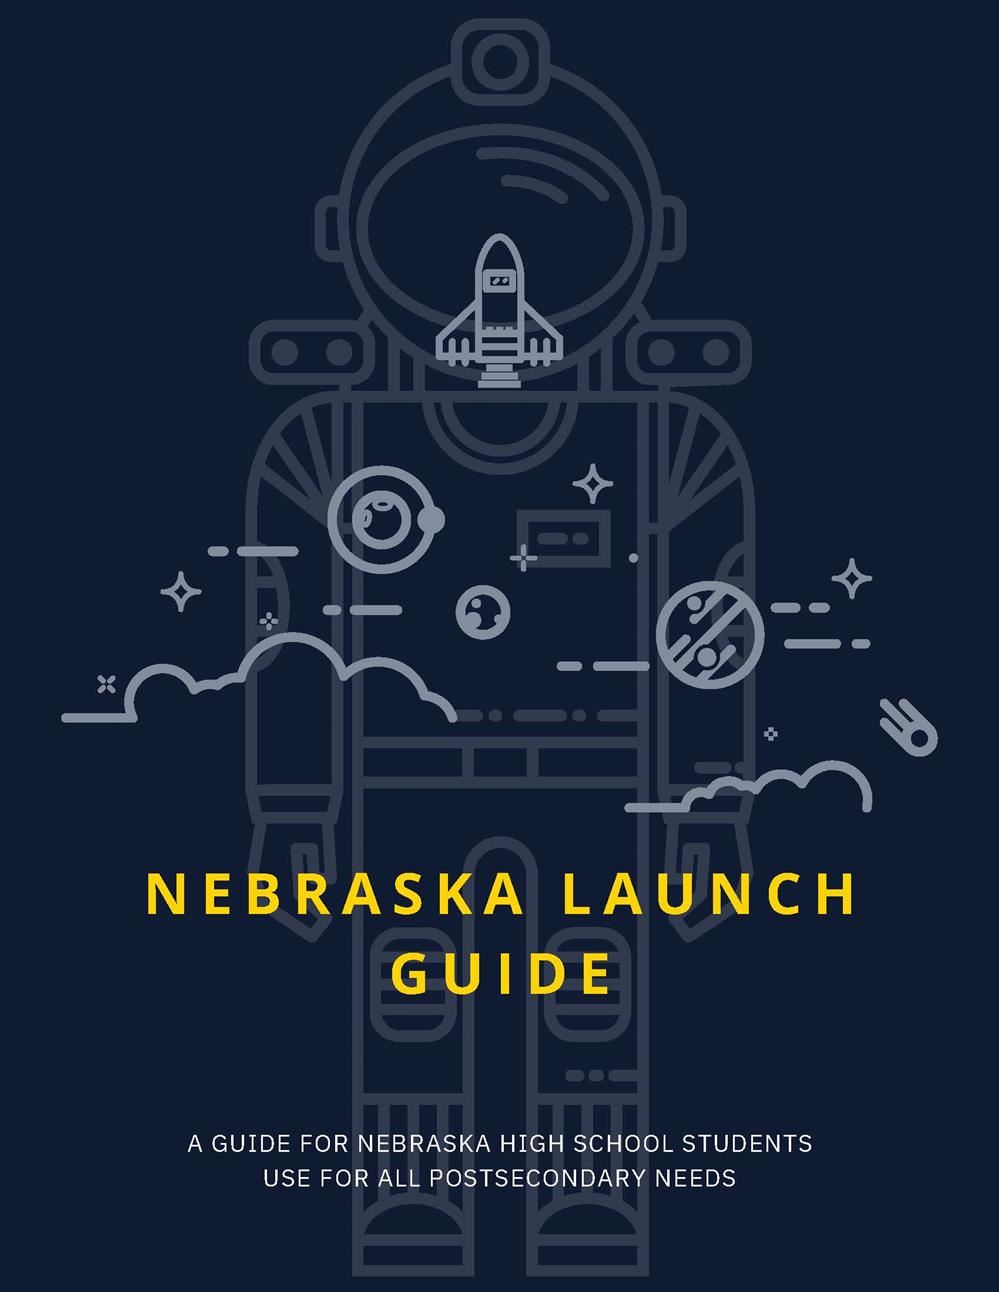 Nebraska Launch Guide: A guide for nebraska high school students use for postsecondary needs